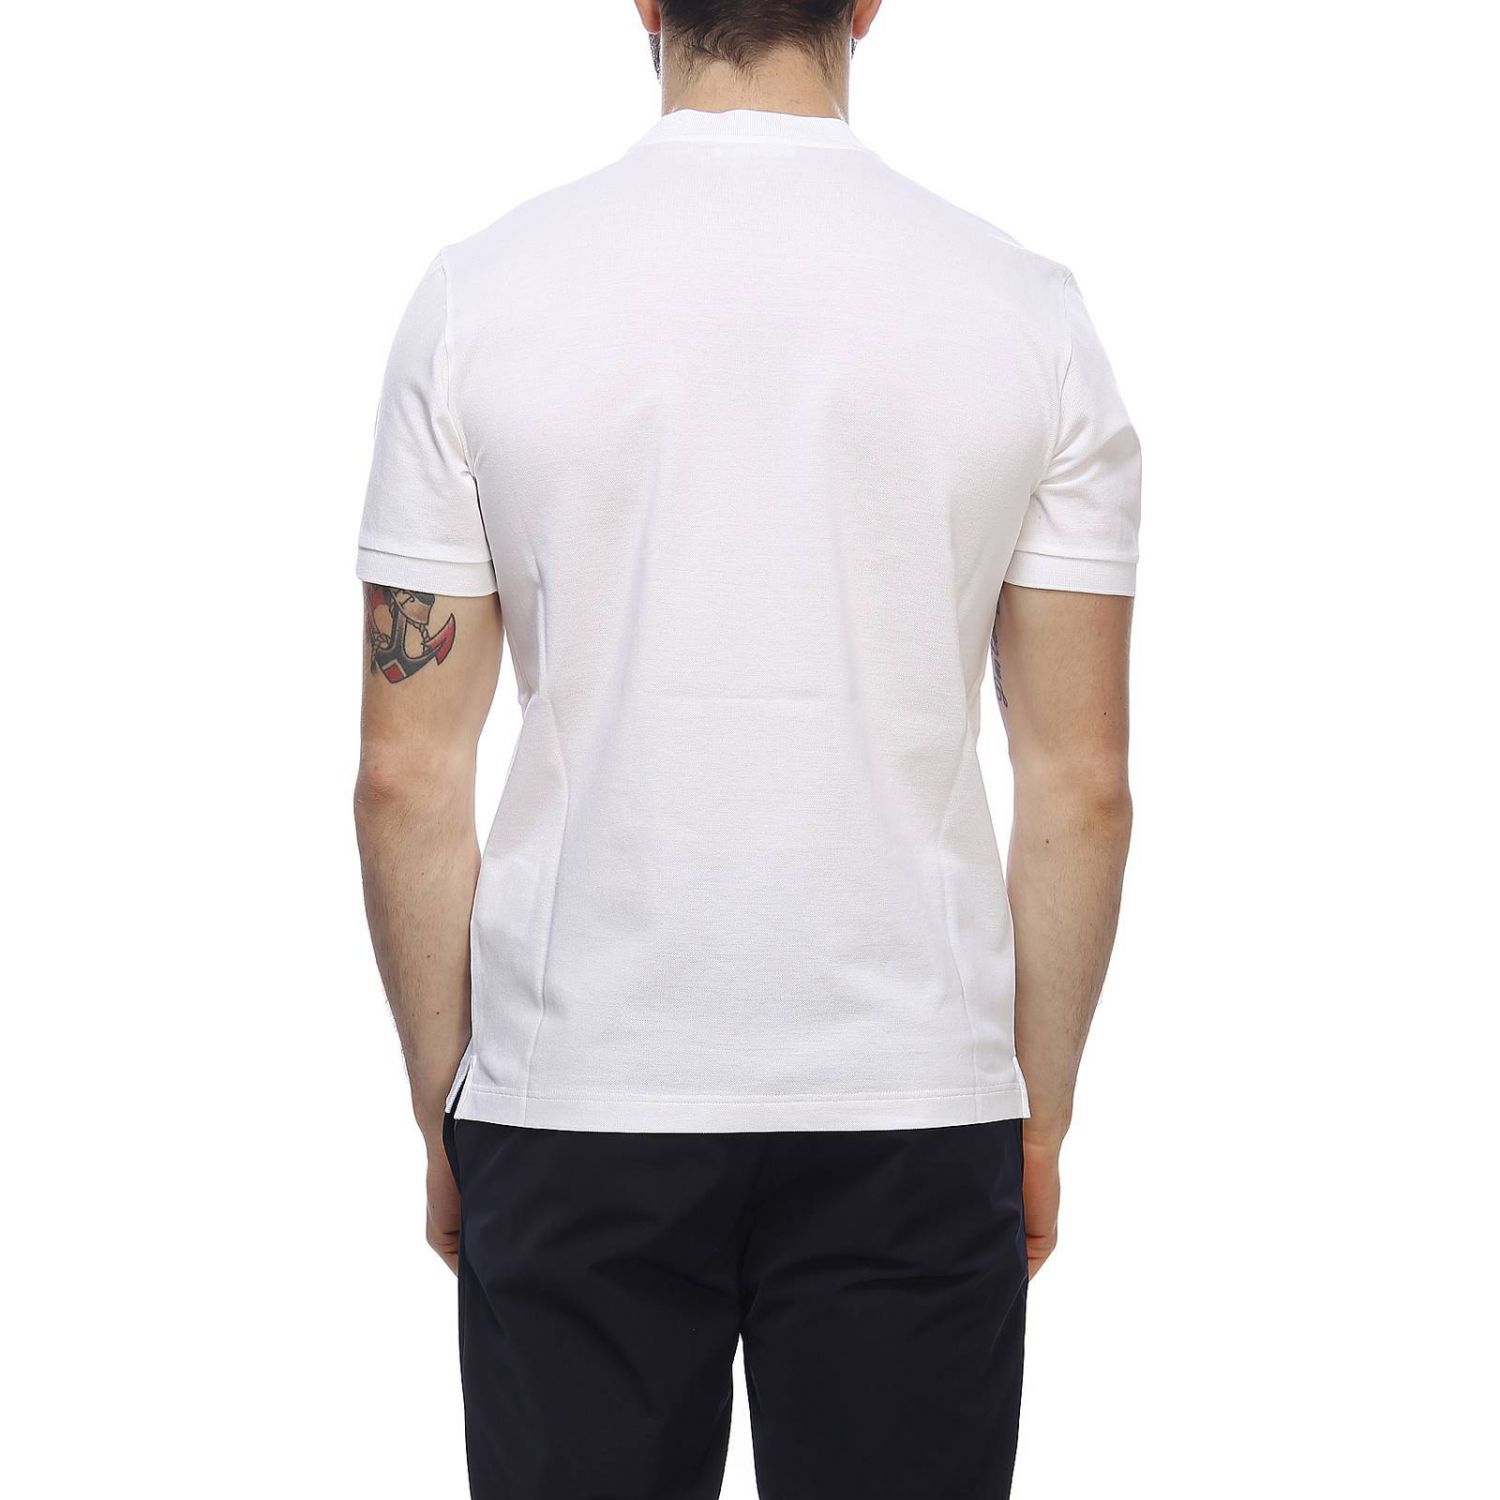 PRADA: T-shirt men | T-Shirt Prada Men White | T-Shirt Prada UJN452 XGS ...